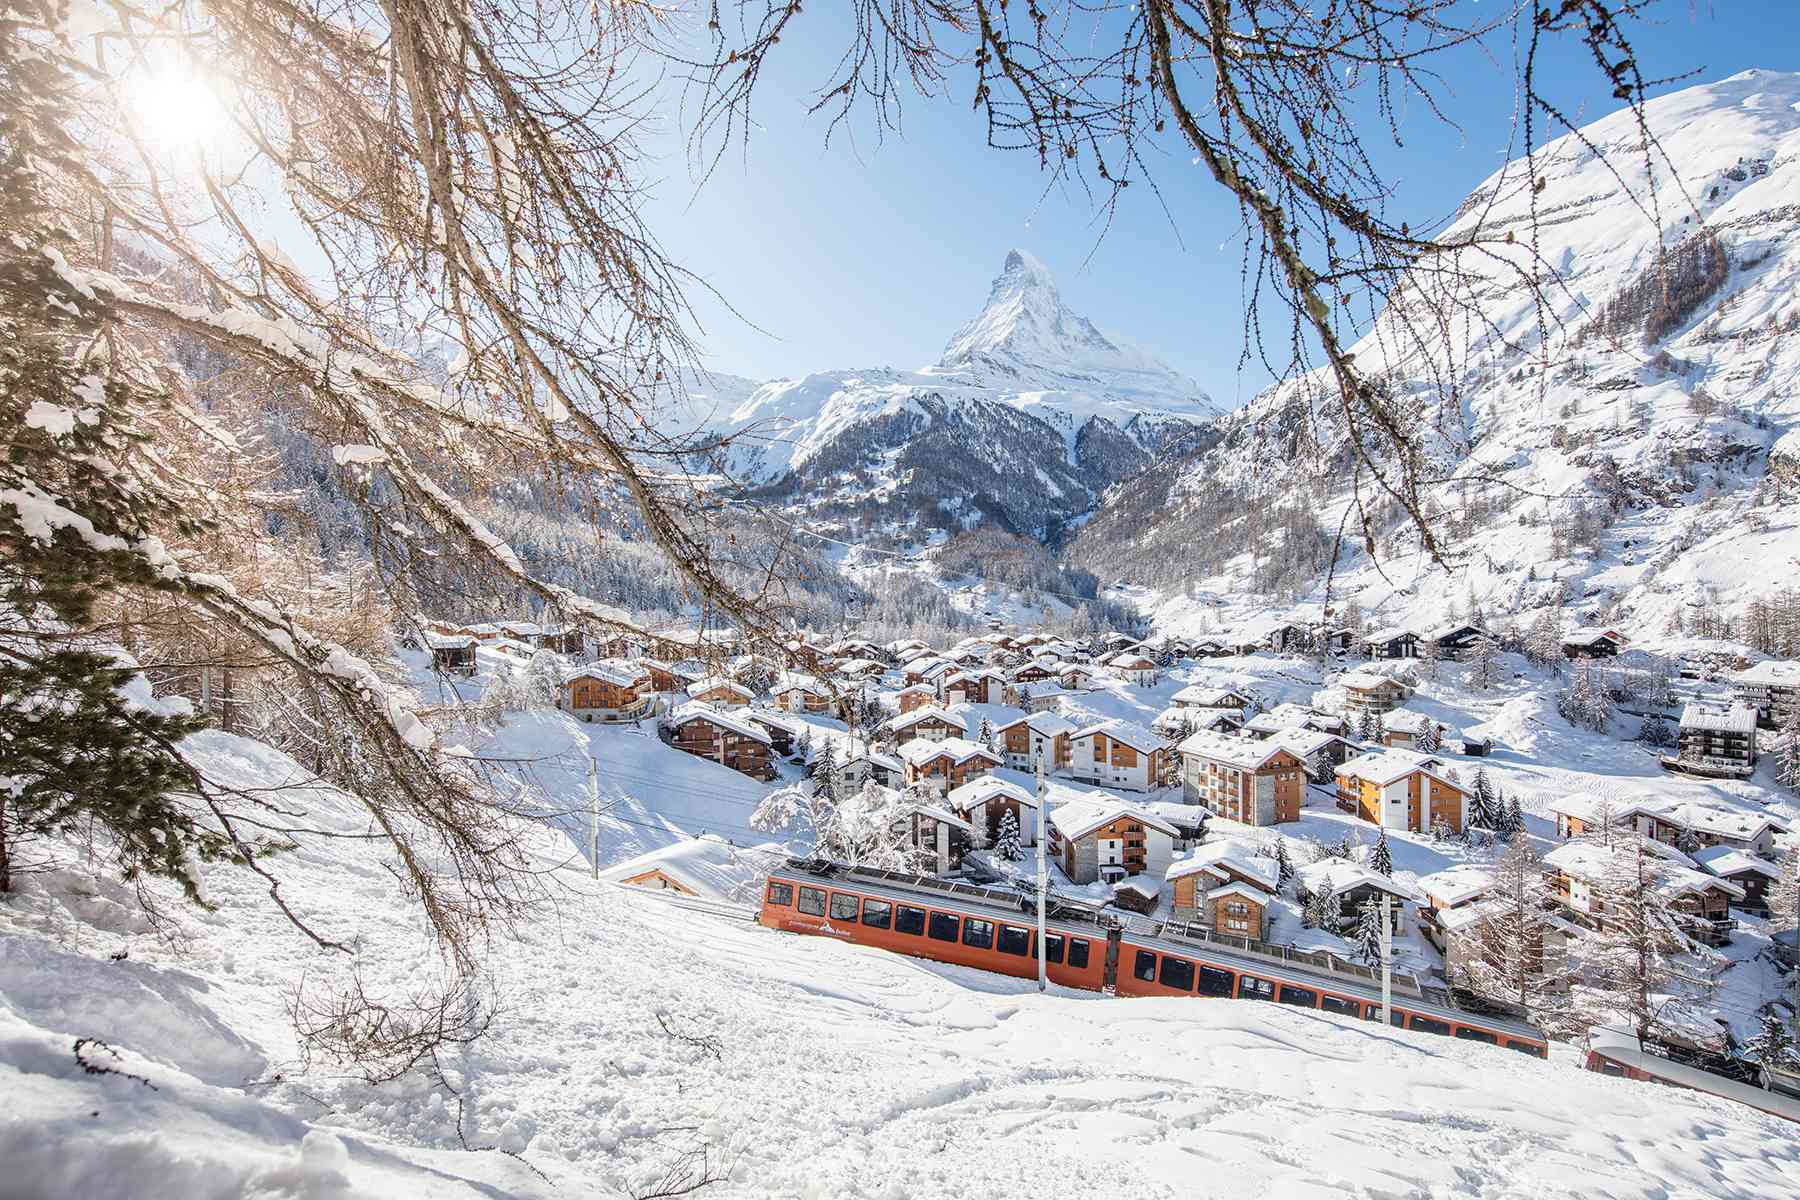 Le village de Zermatt